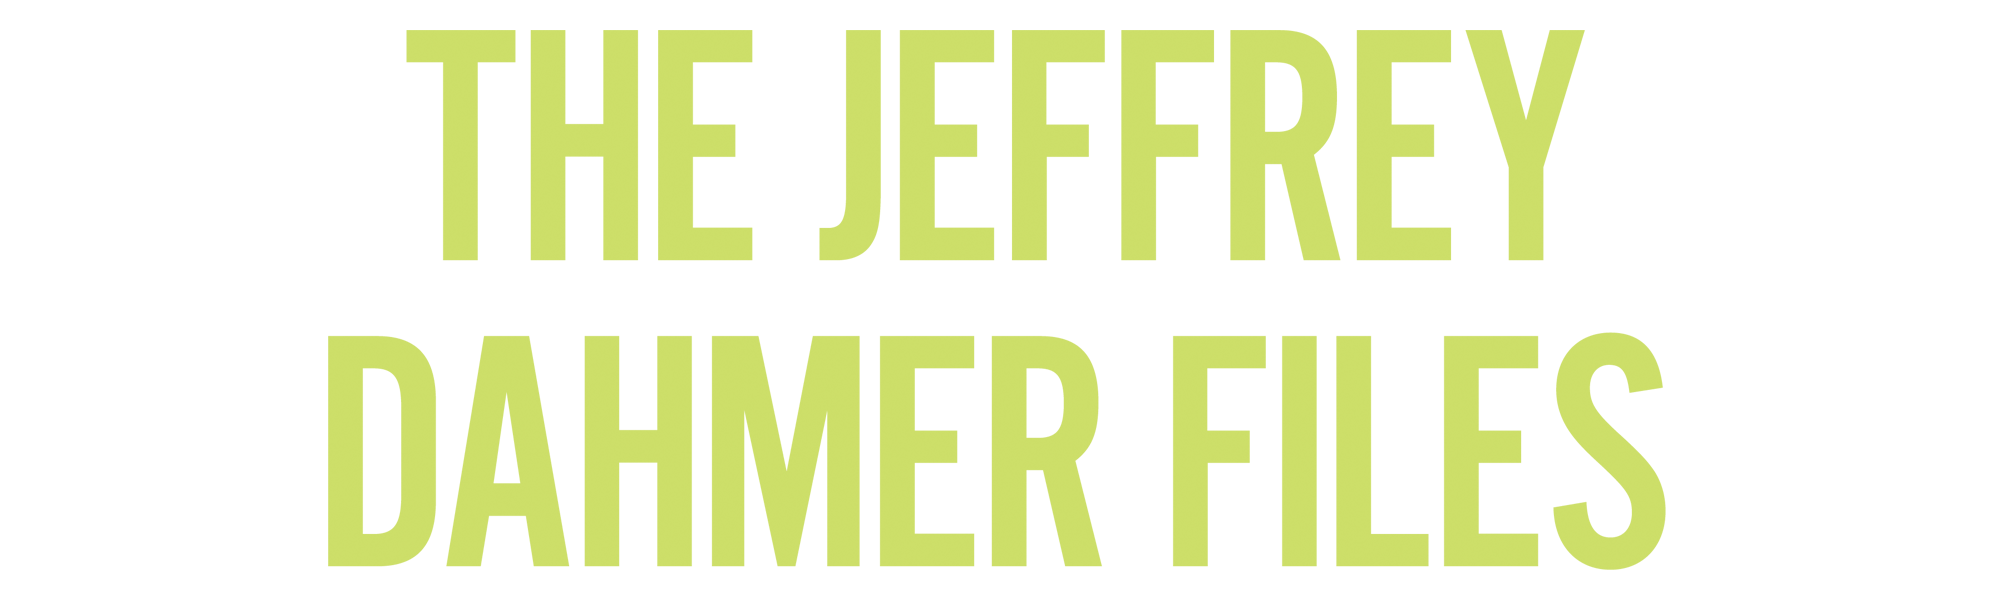 Jeffrey Dahmer Files, The